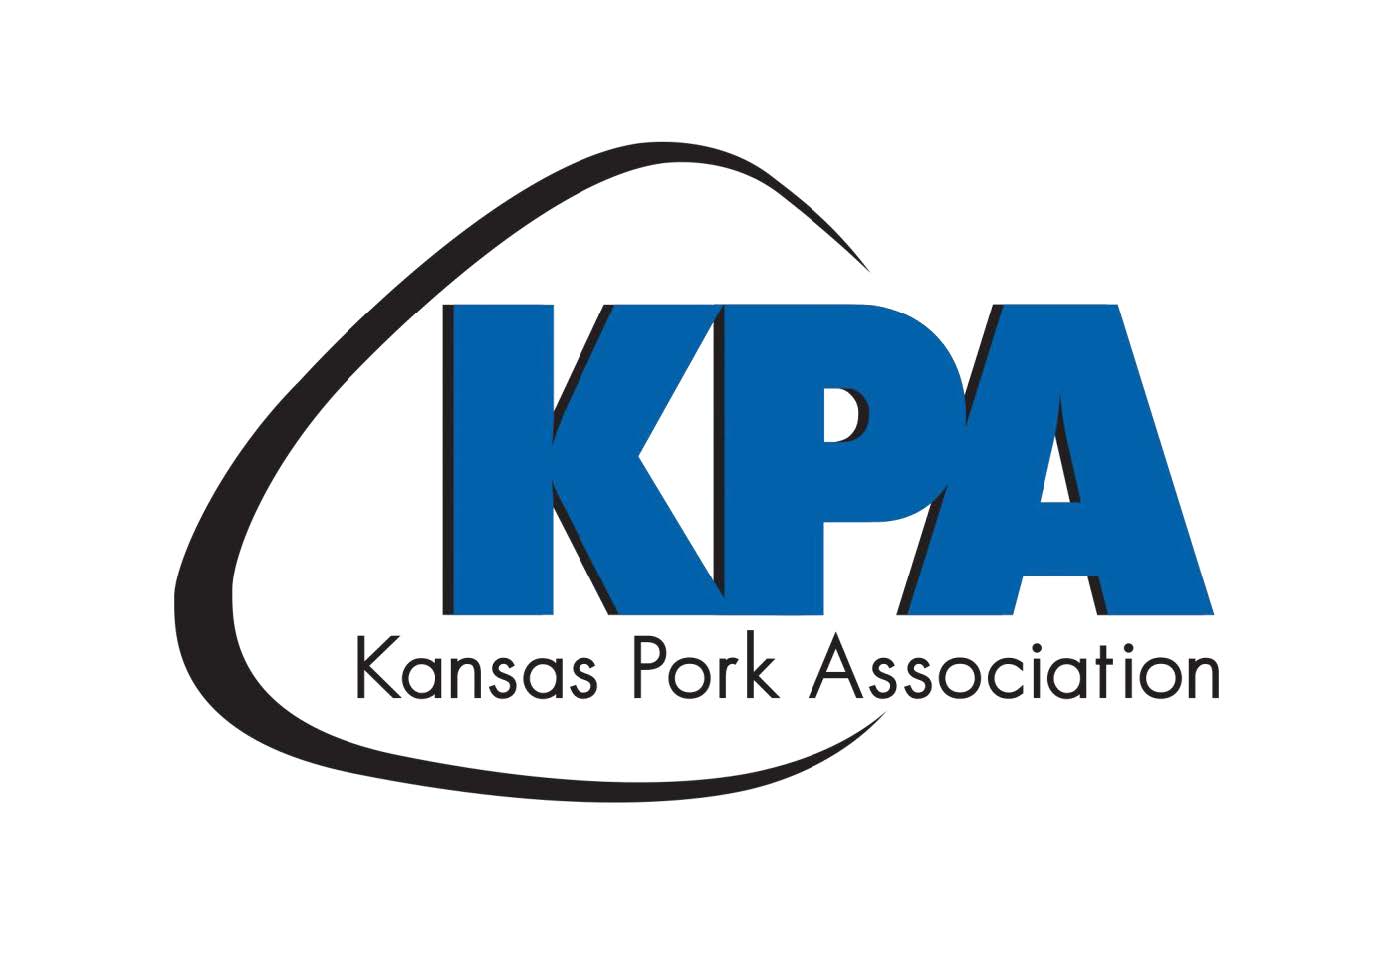 Kansas Pork Association